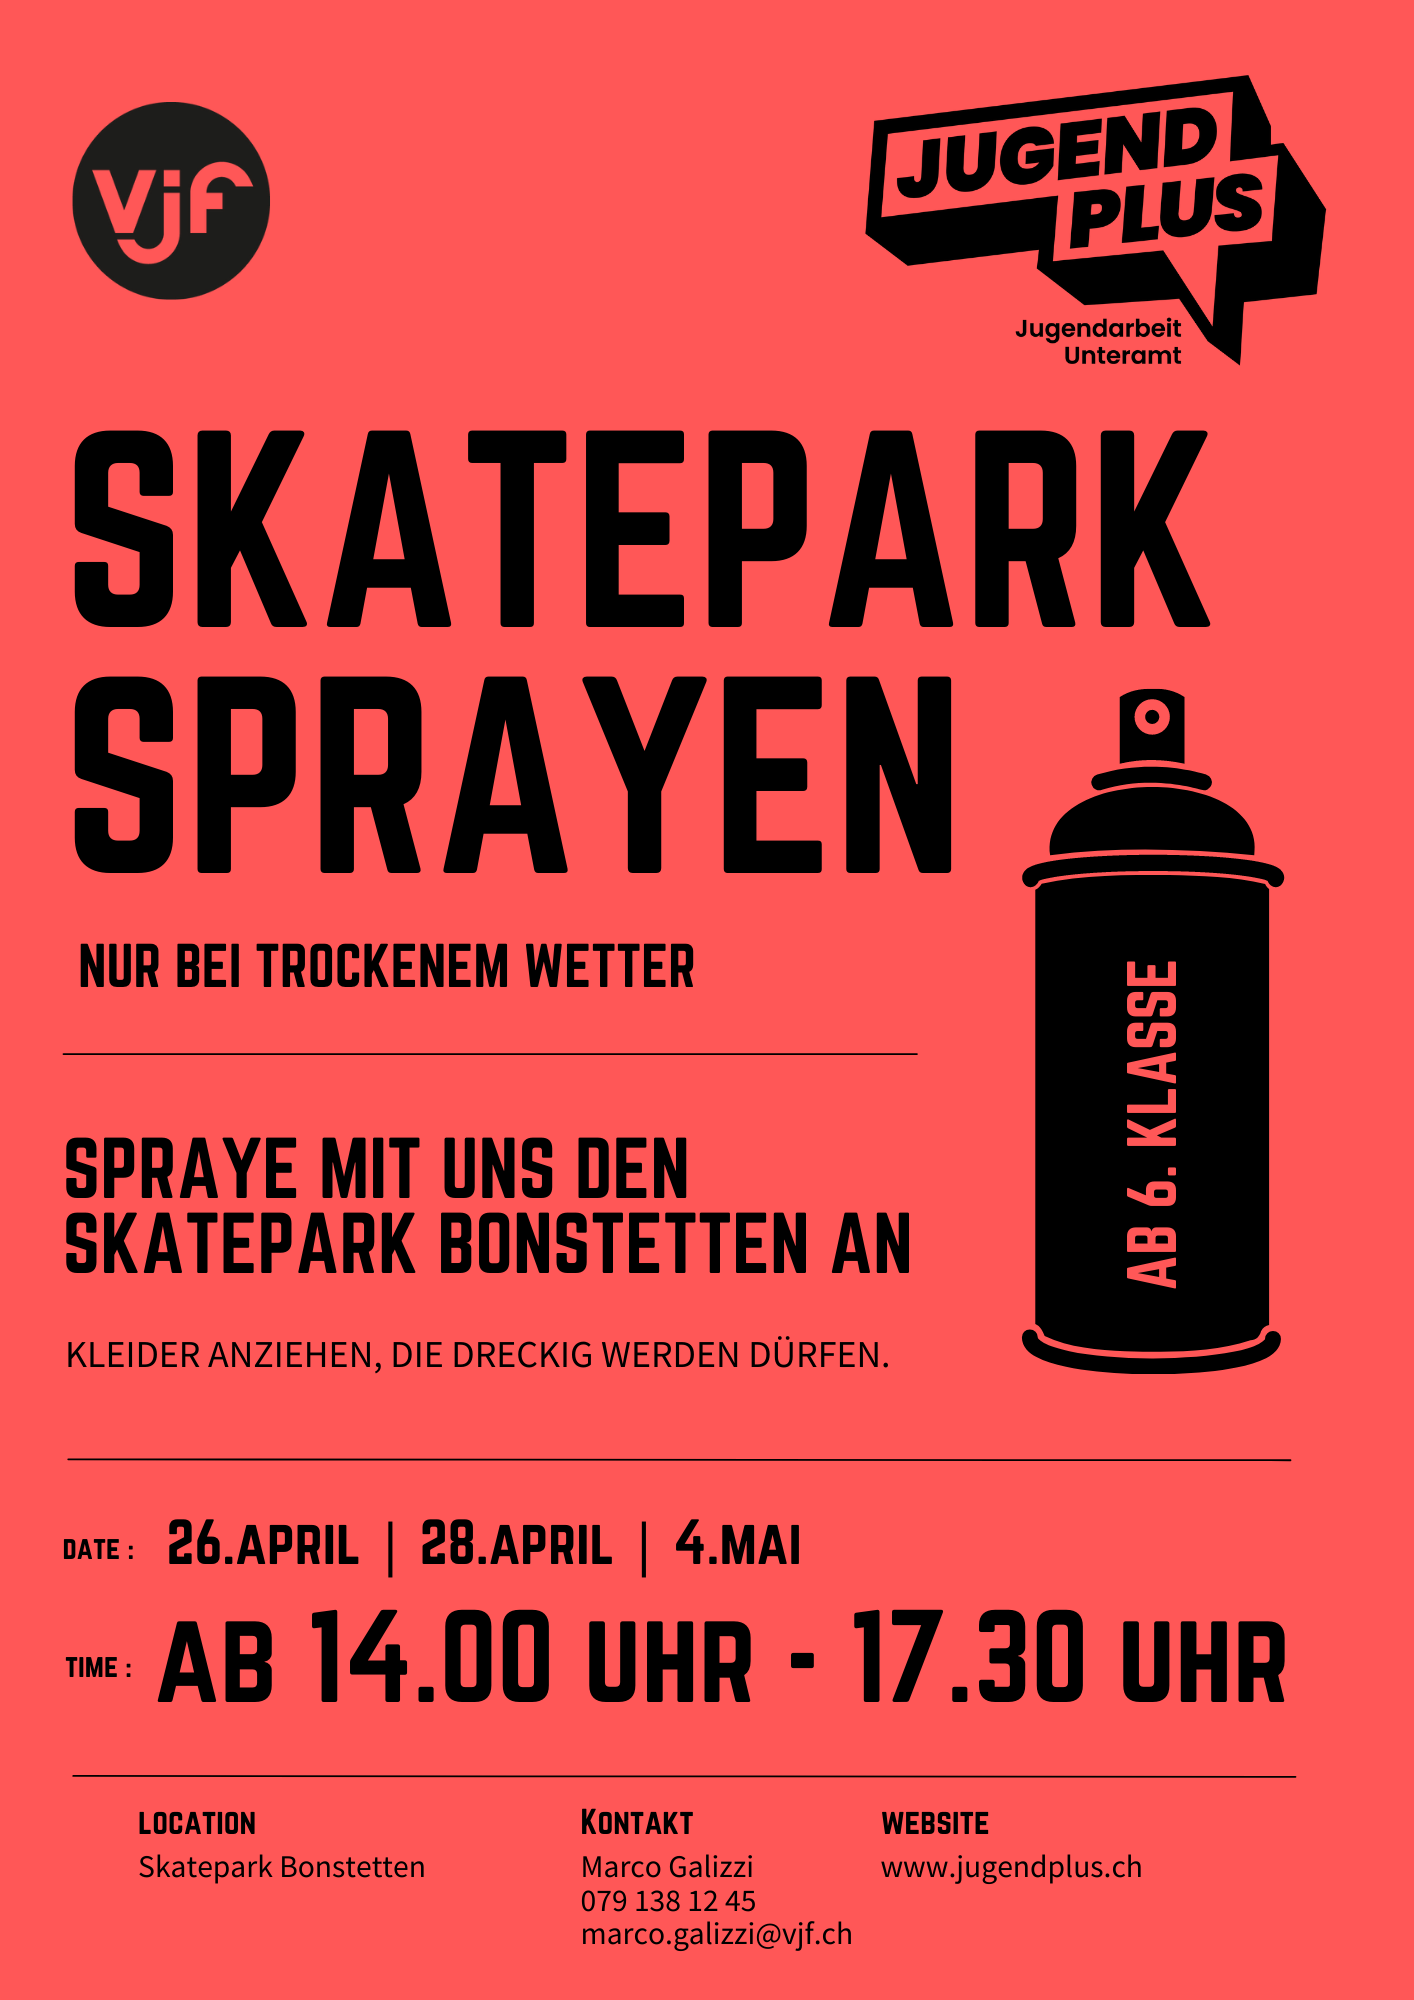 Skatepark Sprayen 